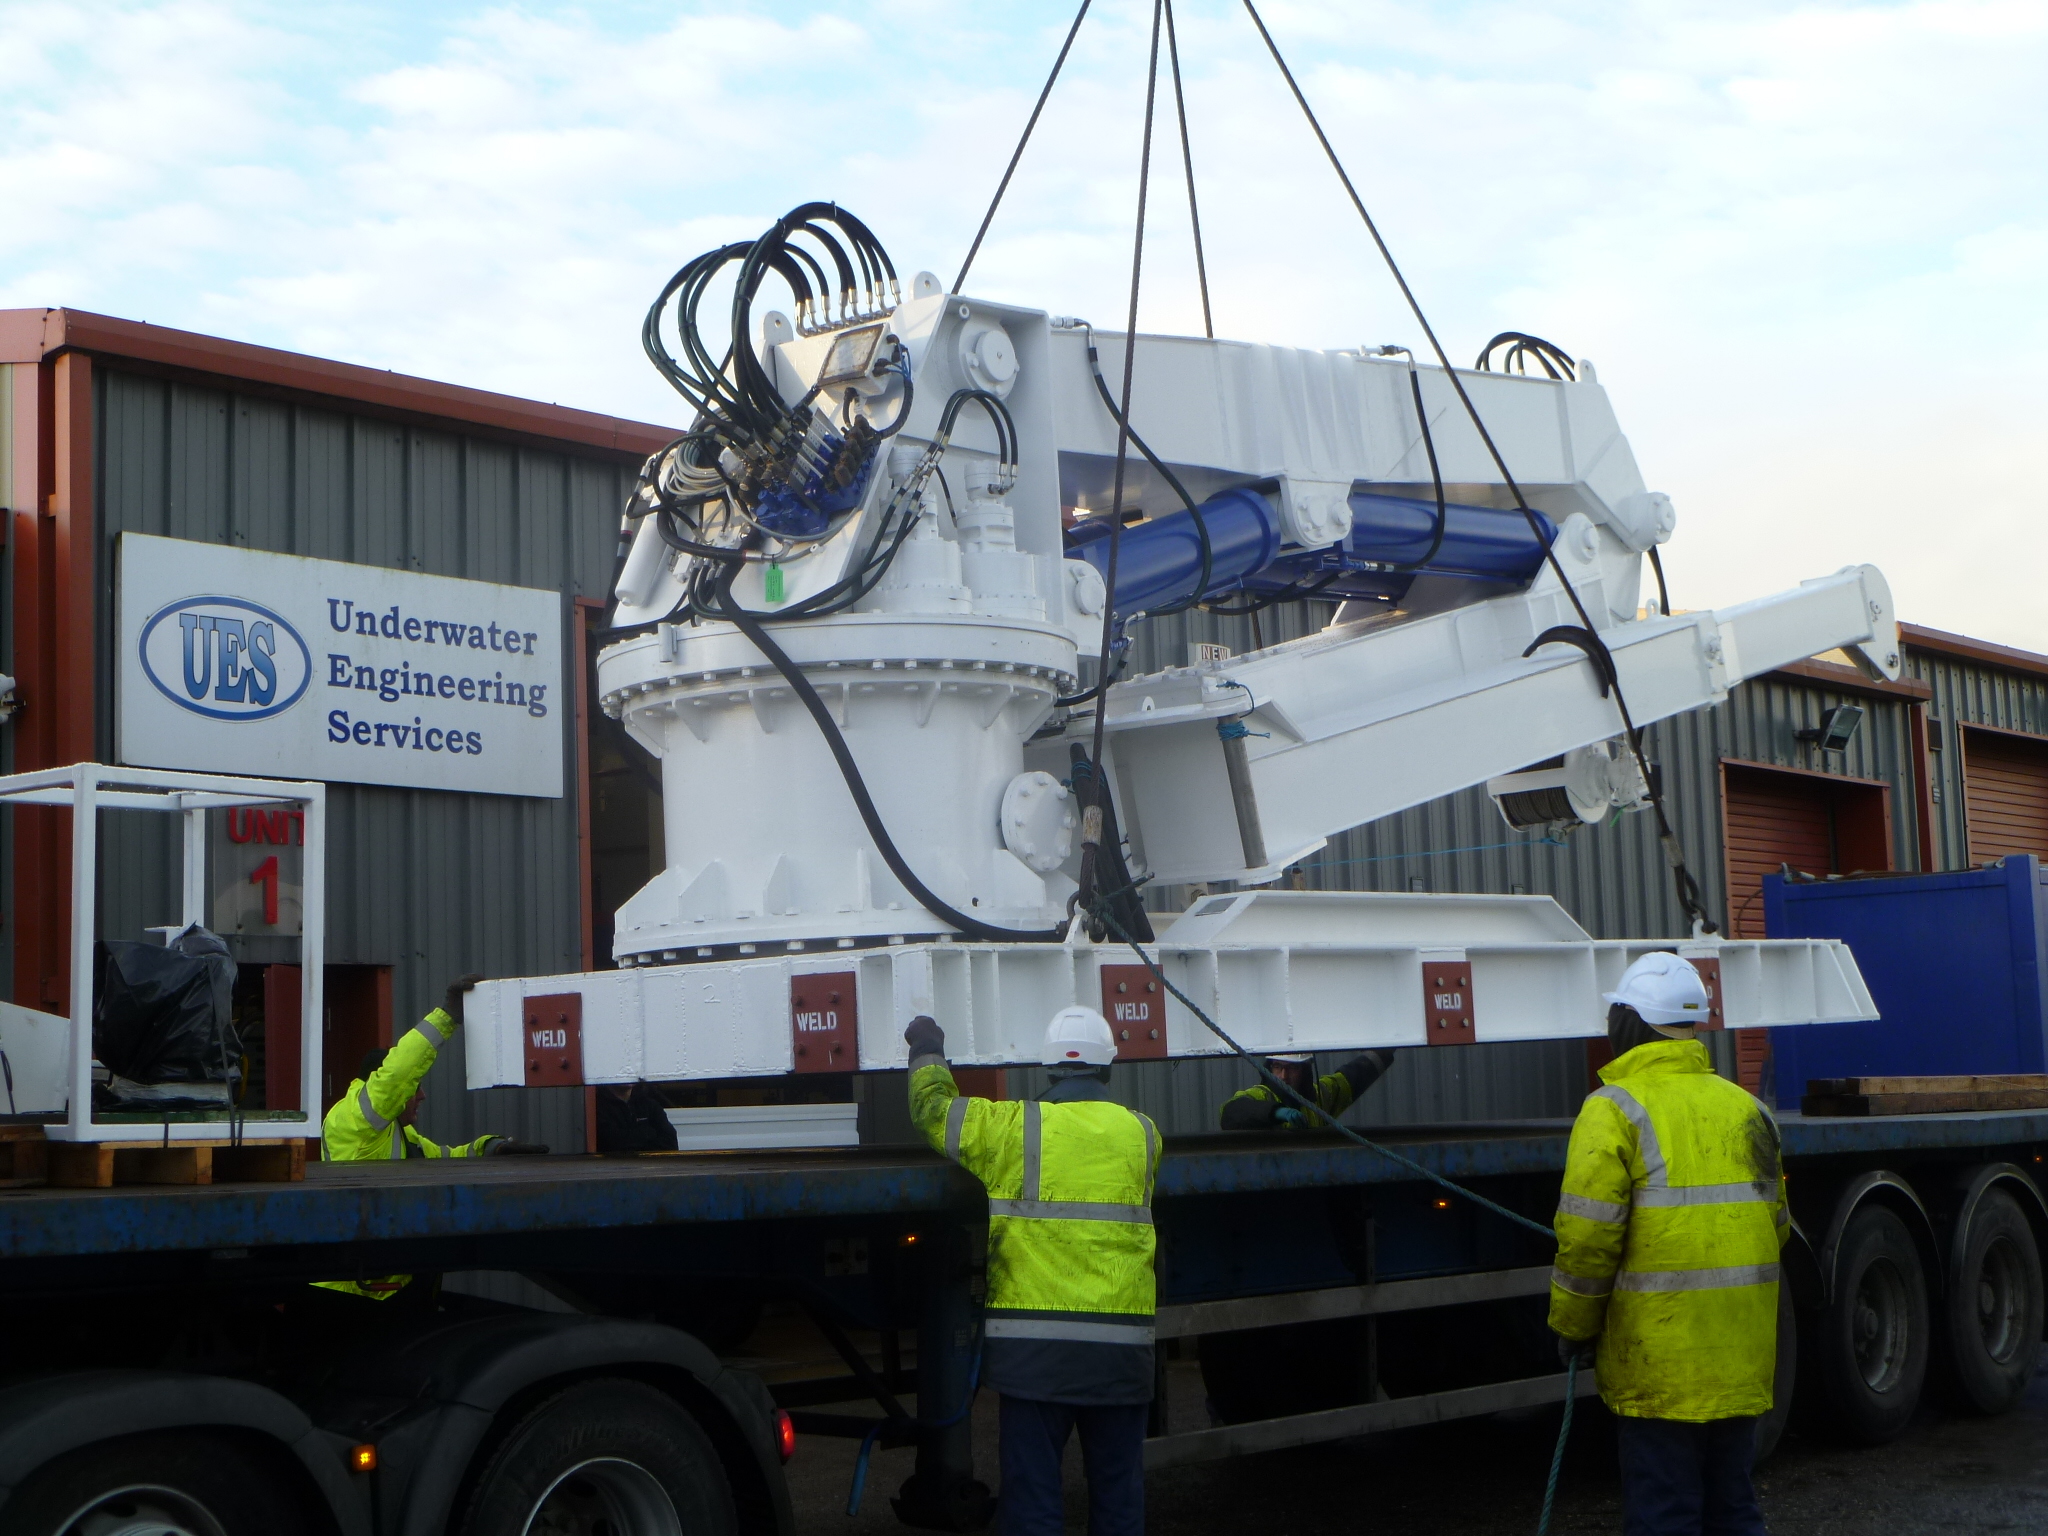 UES engineers complete the refurbishment of client’s marine crane